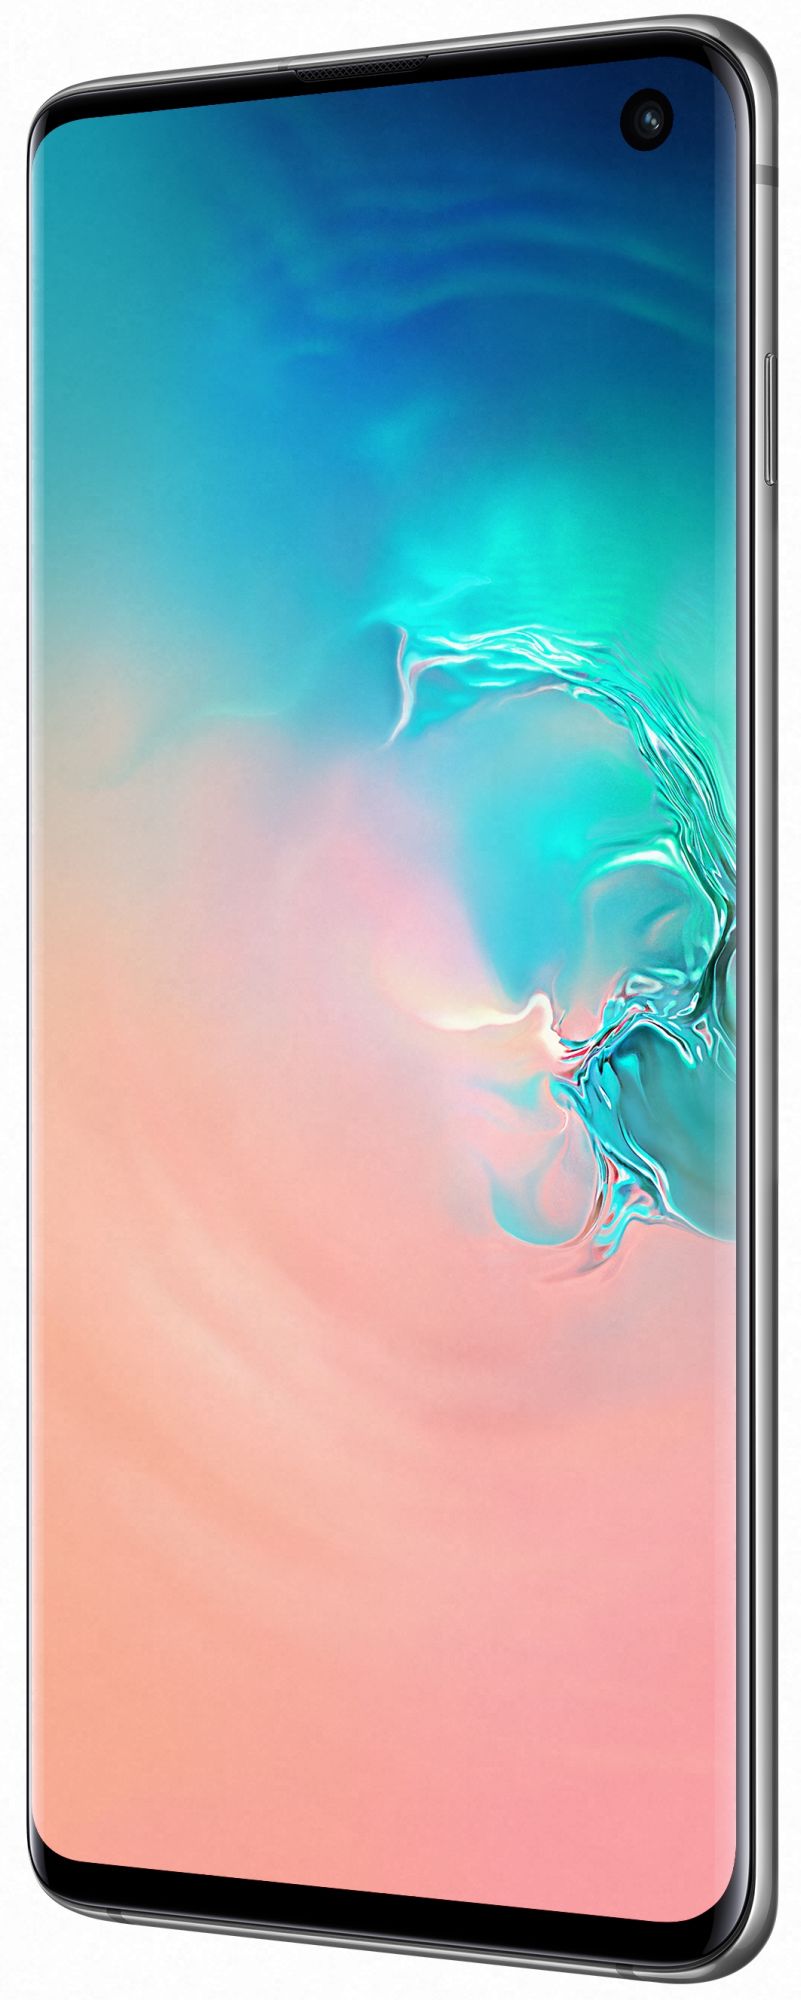 Samsung Galaxy S10 128GB White